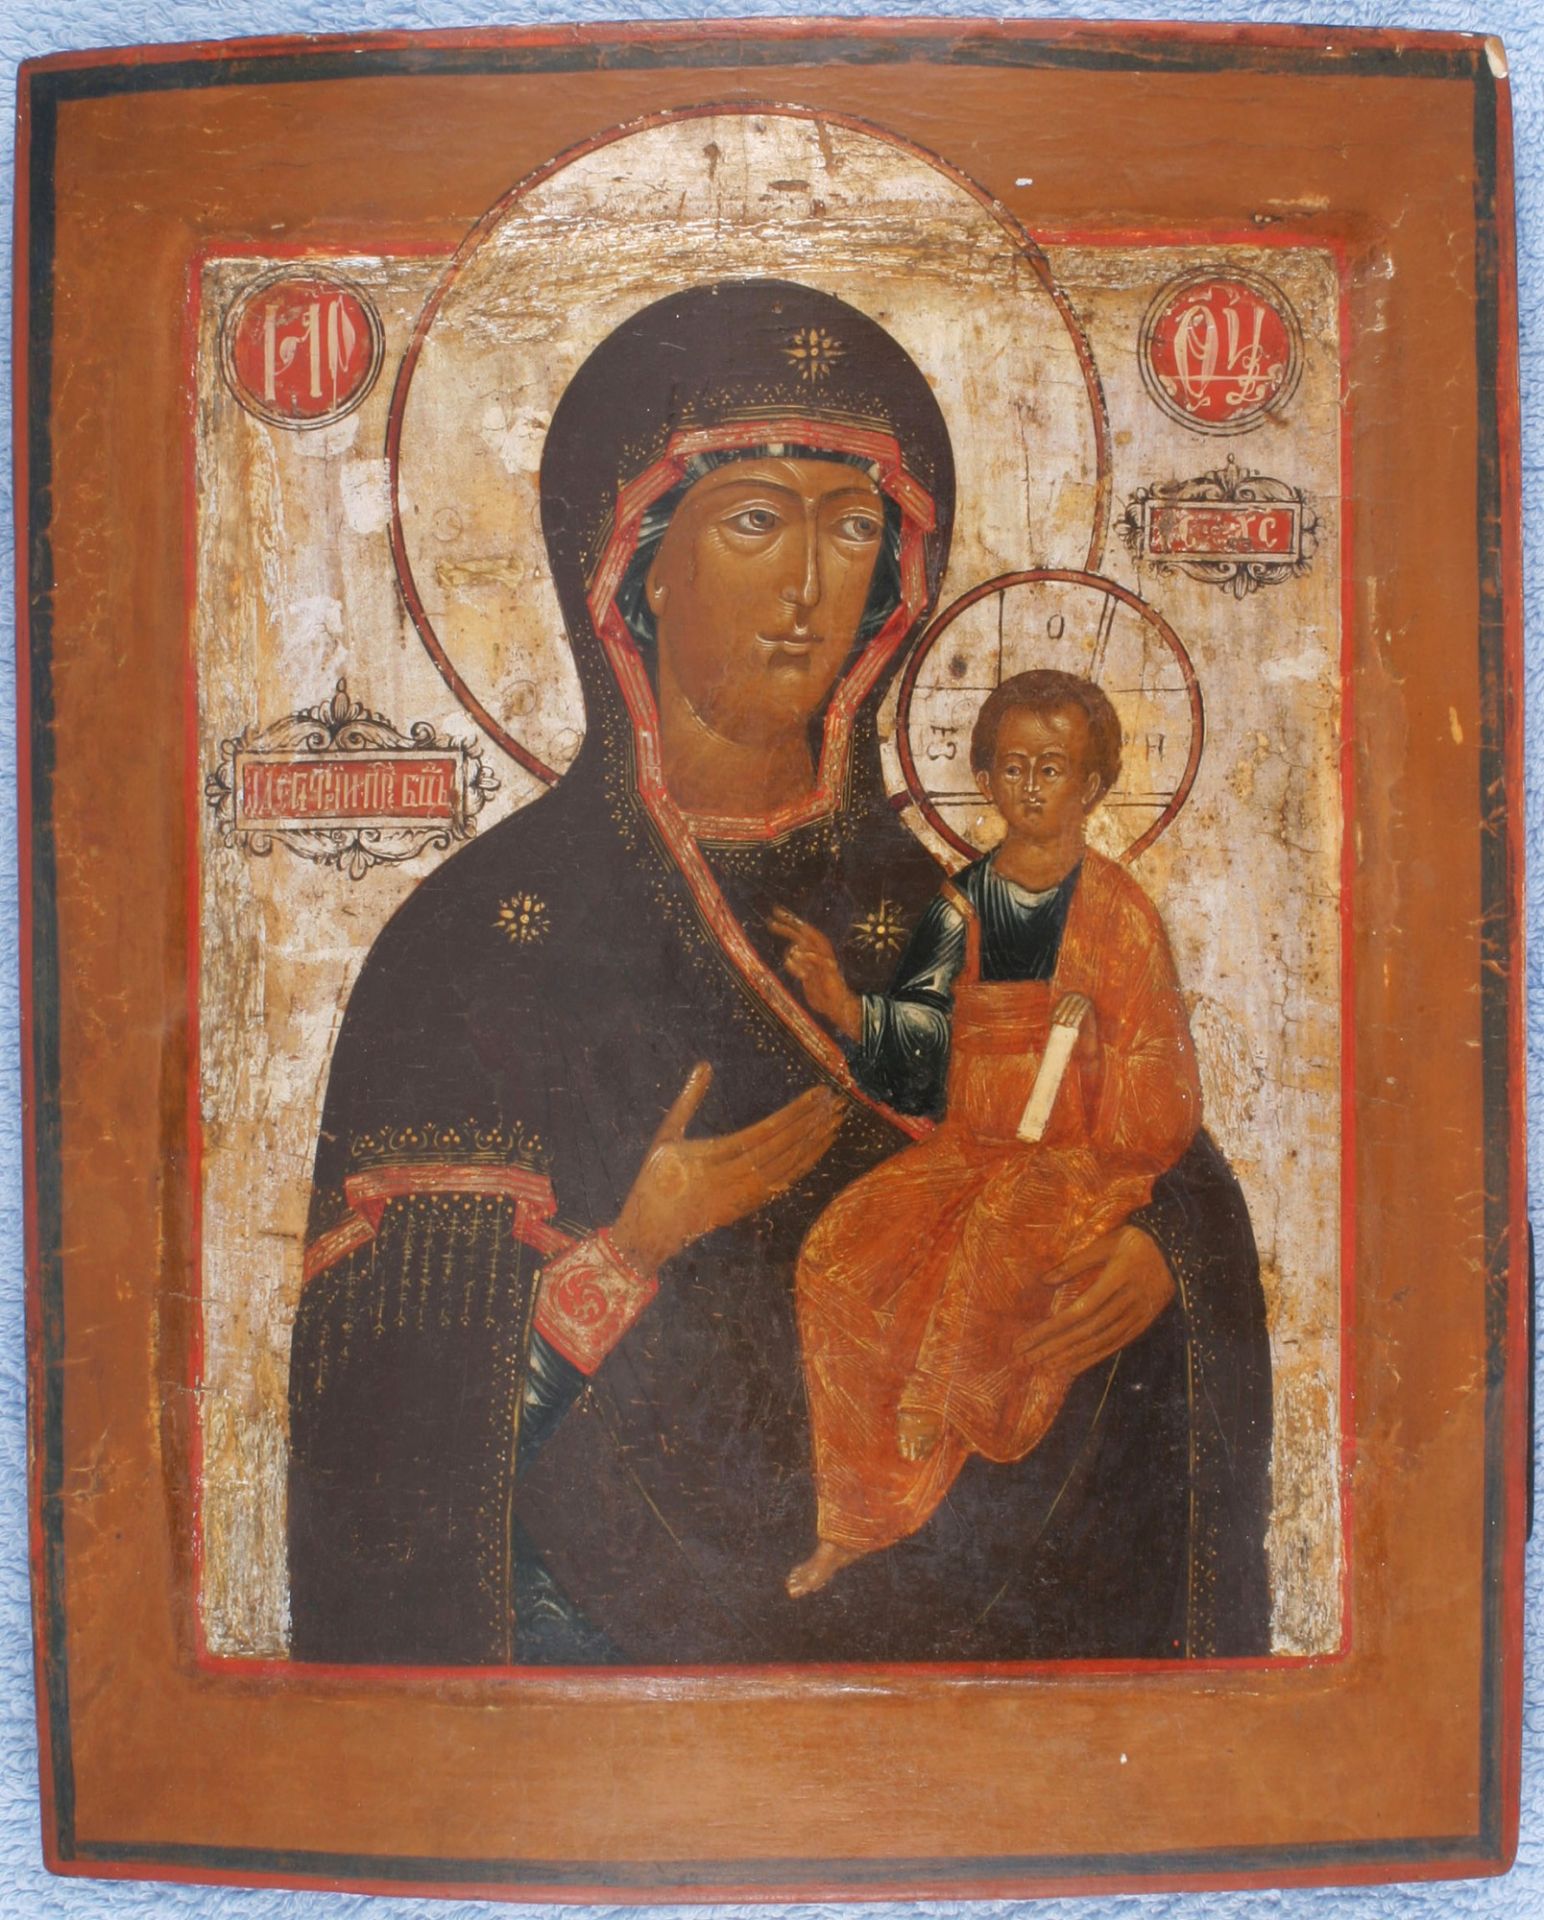 Russian icon "Our Lady Hodegetria of Smolensk". - Russia, 18th cent. - 31x26 cm.